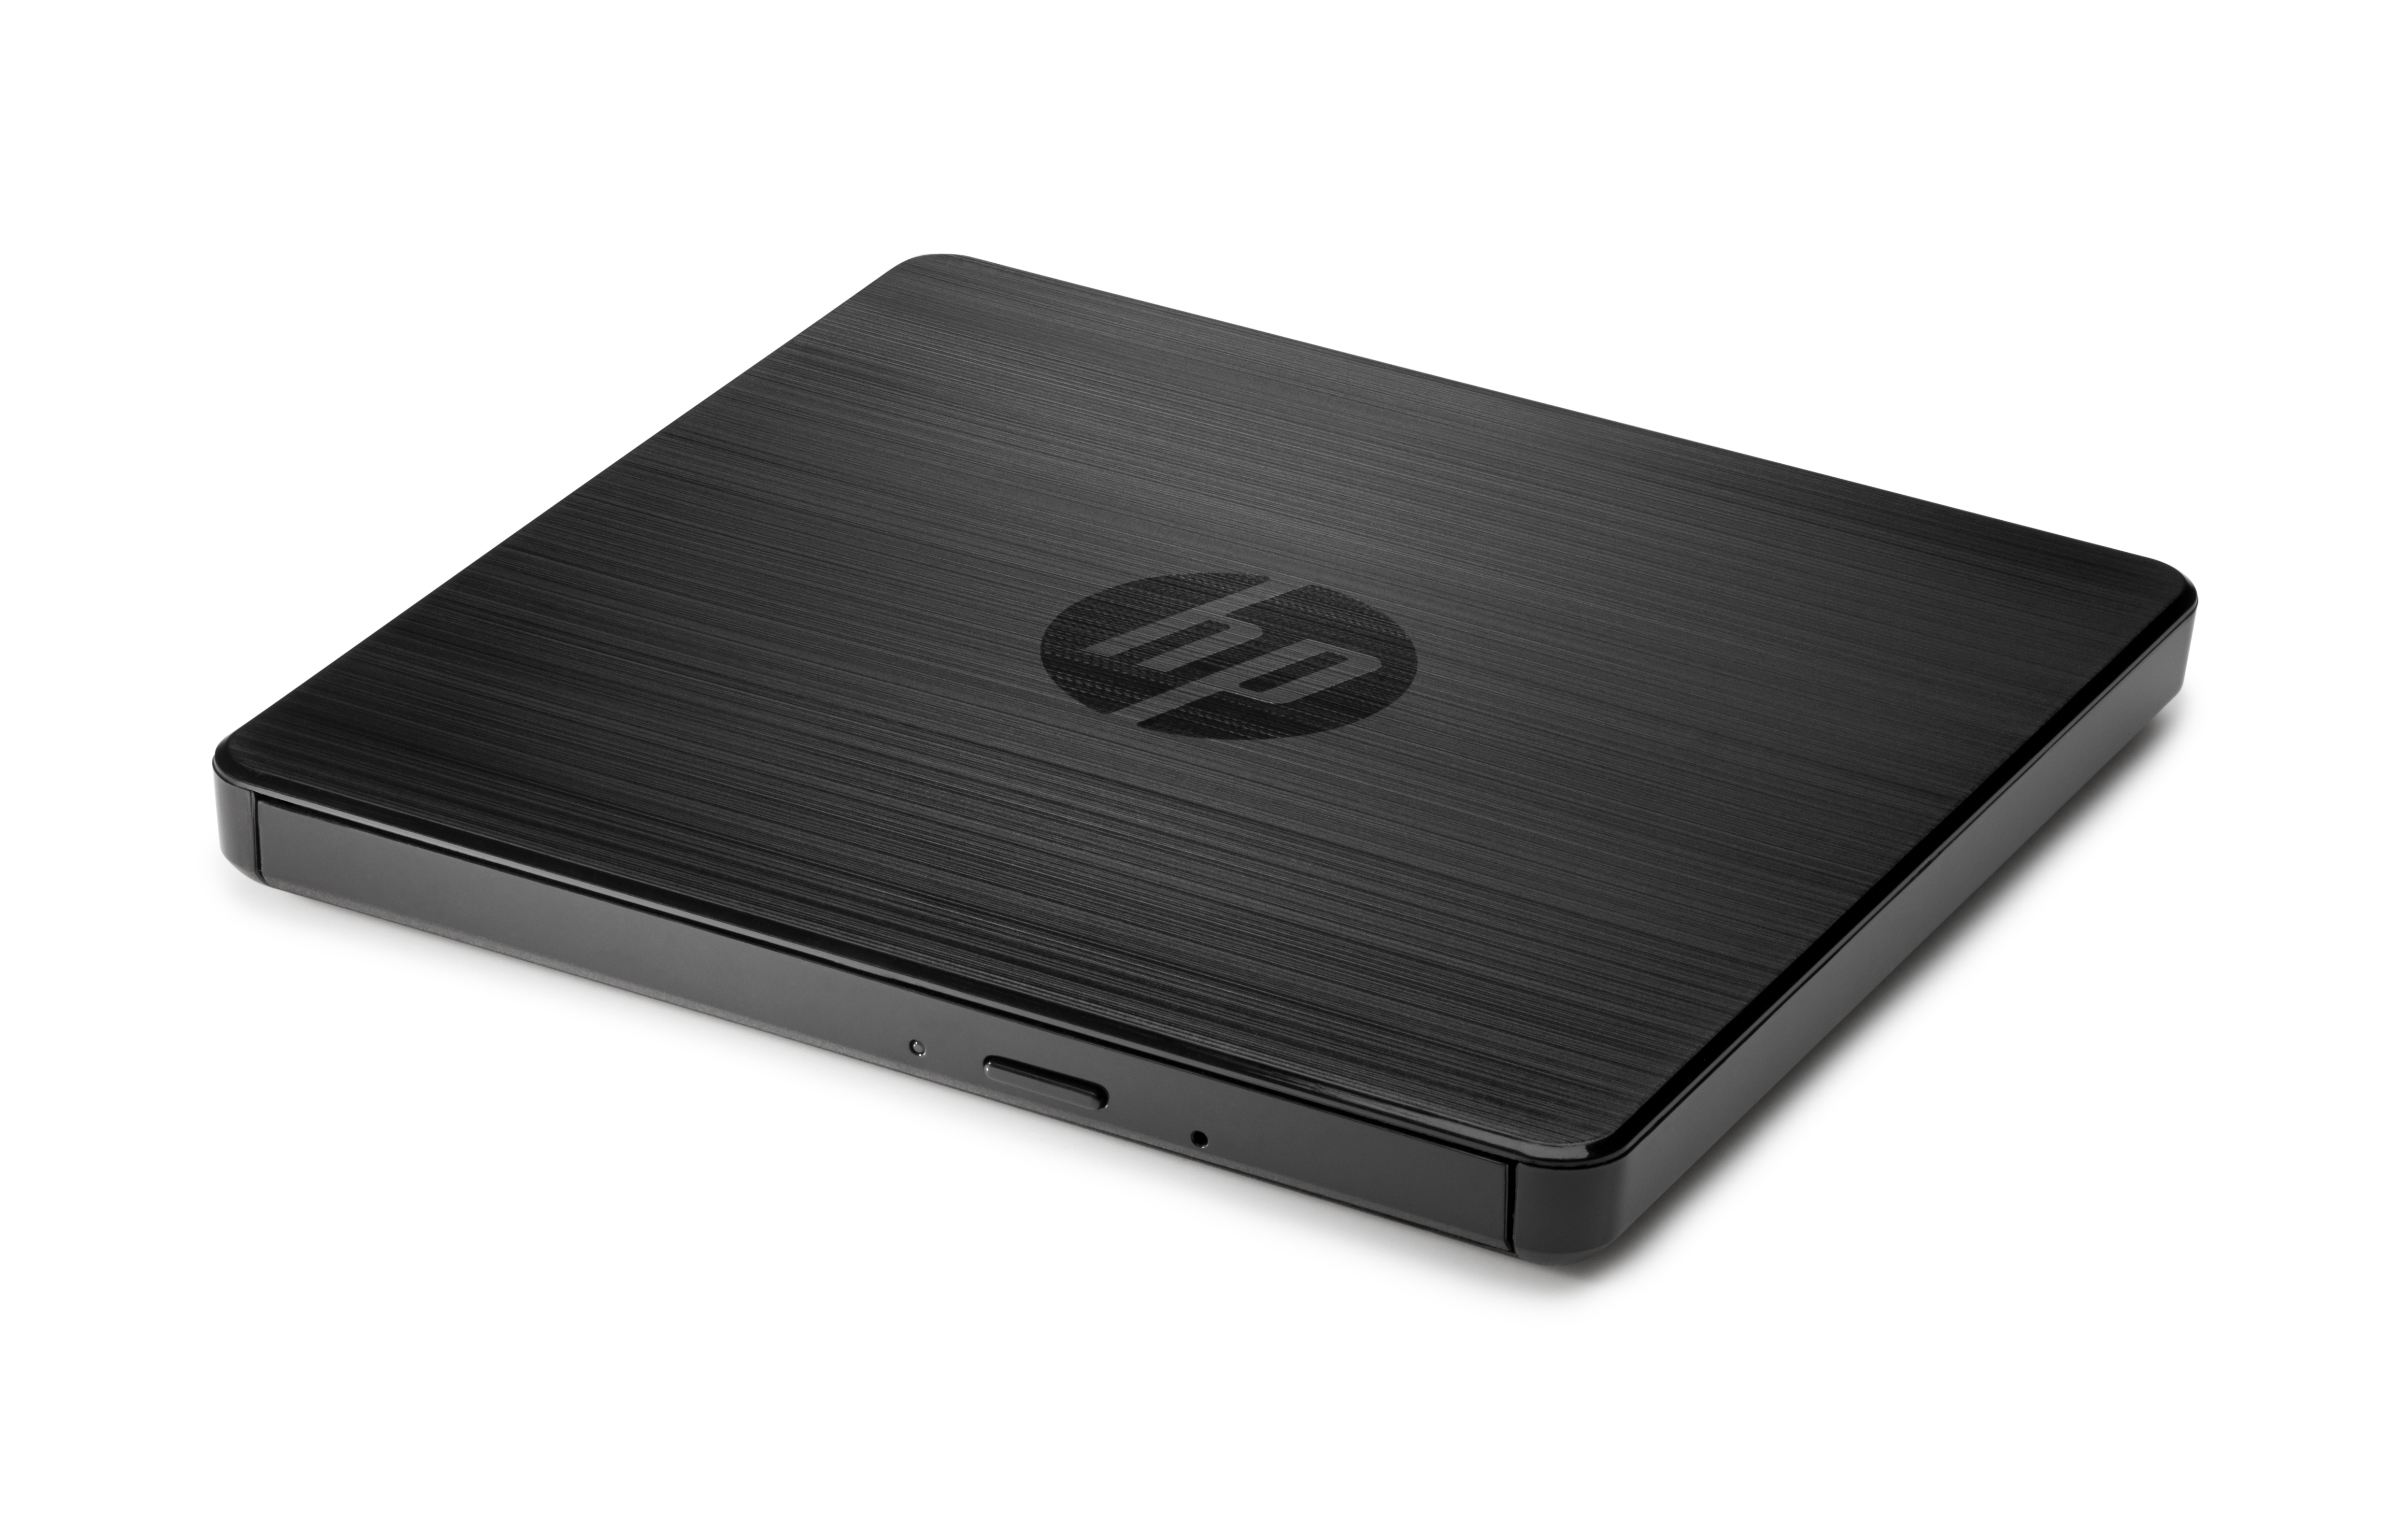 HP Externes USB-DVD-RW-Laufwerk